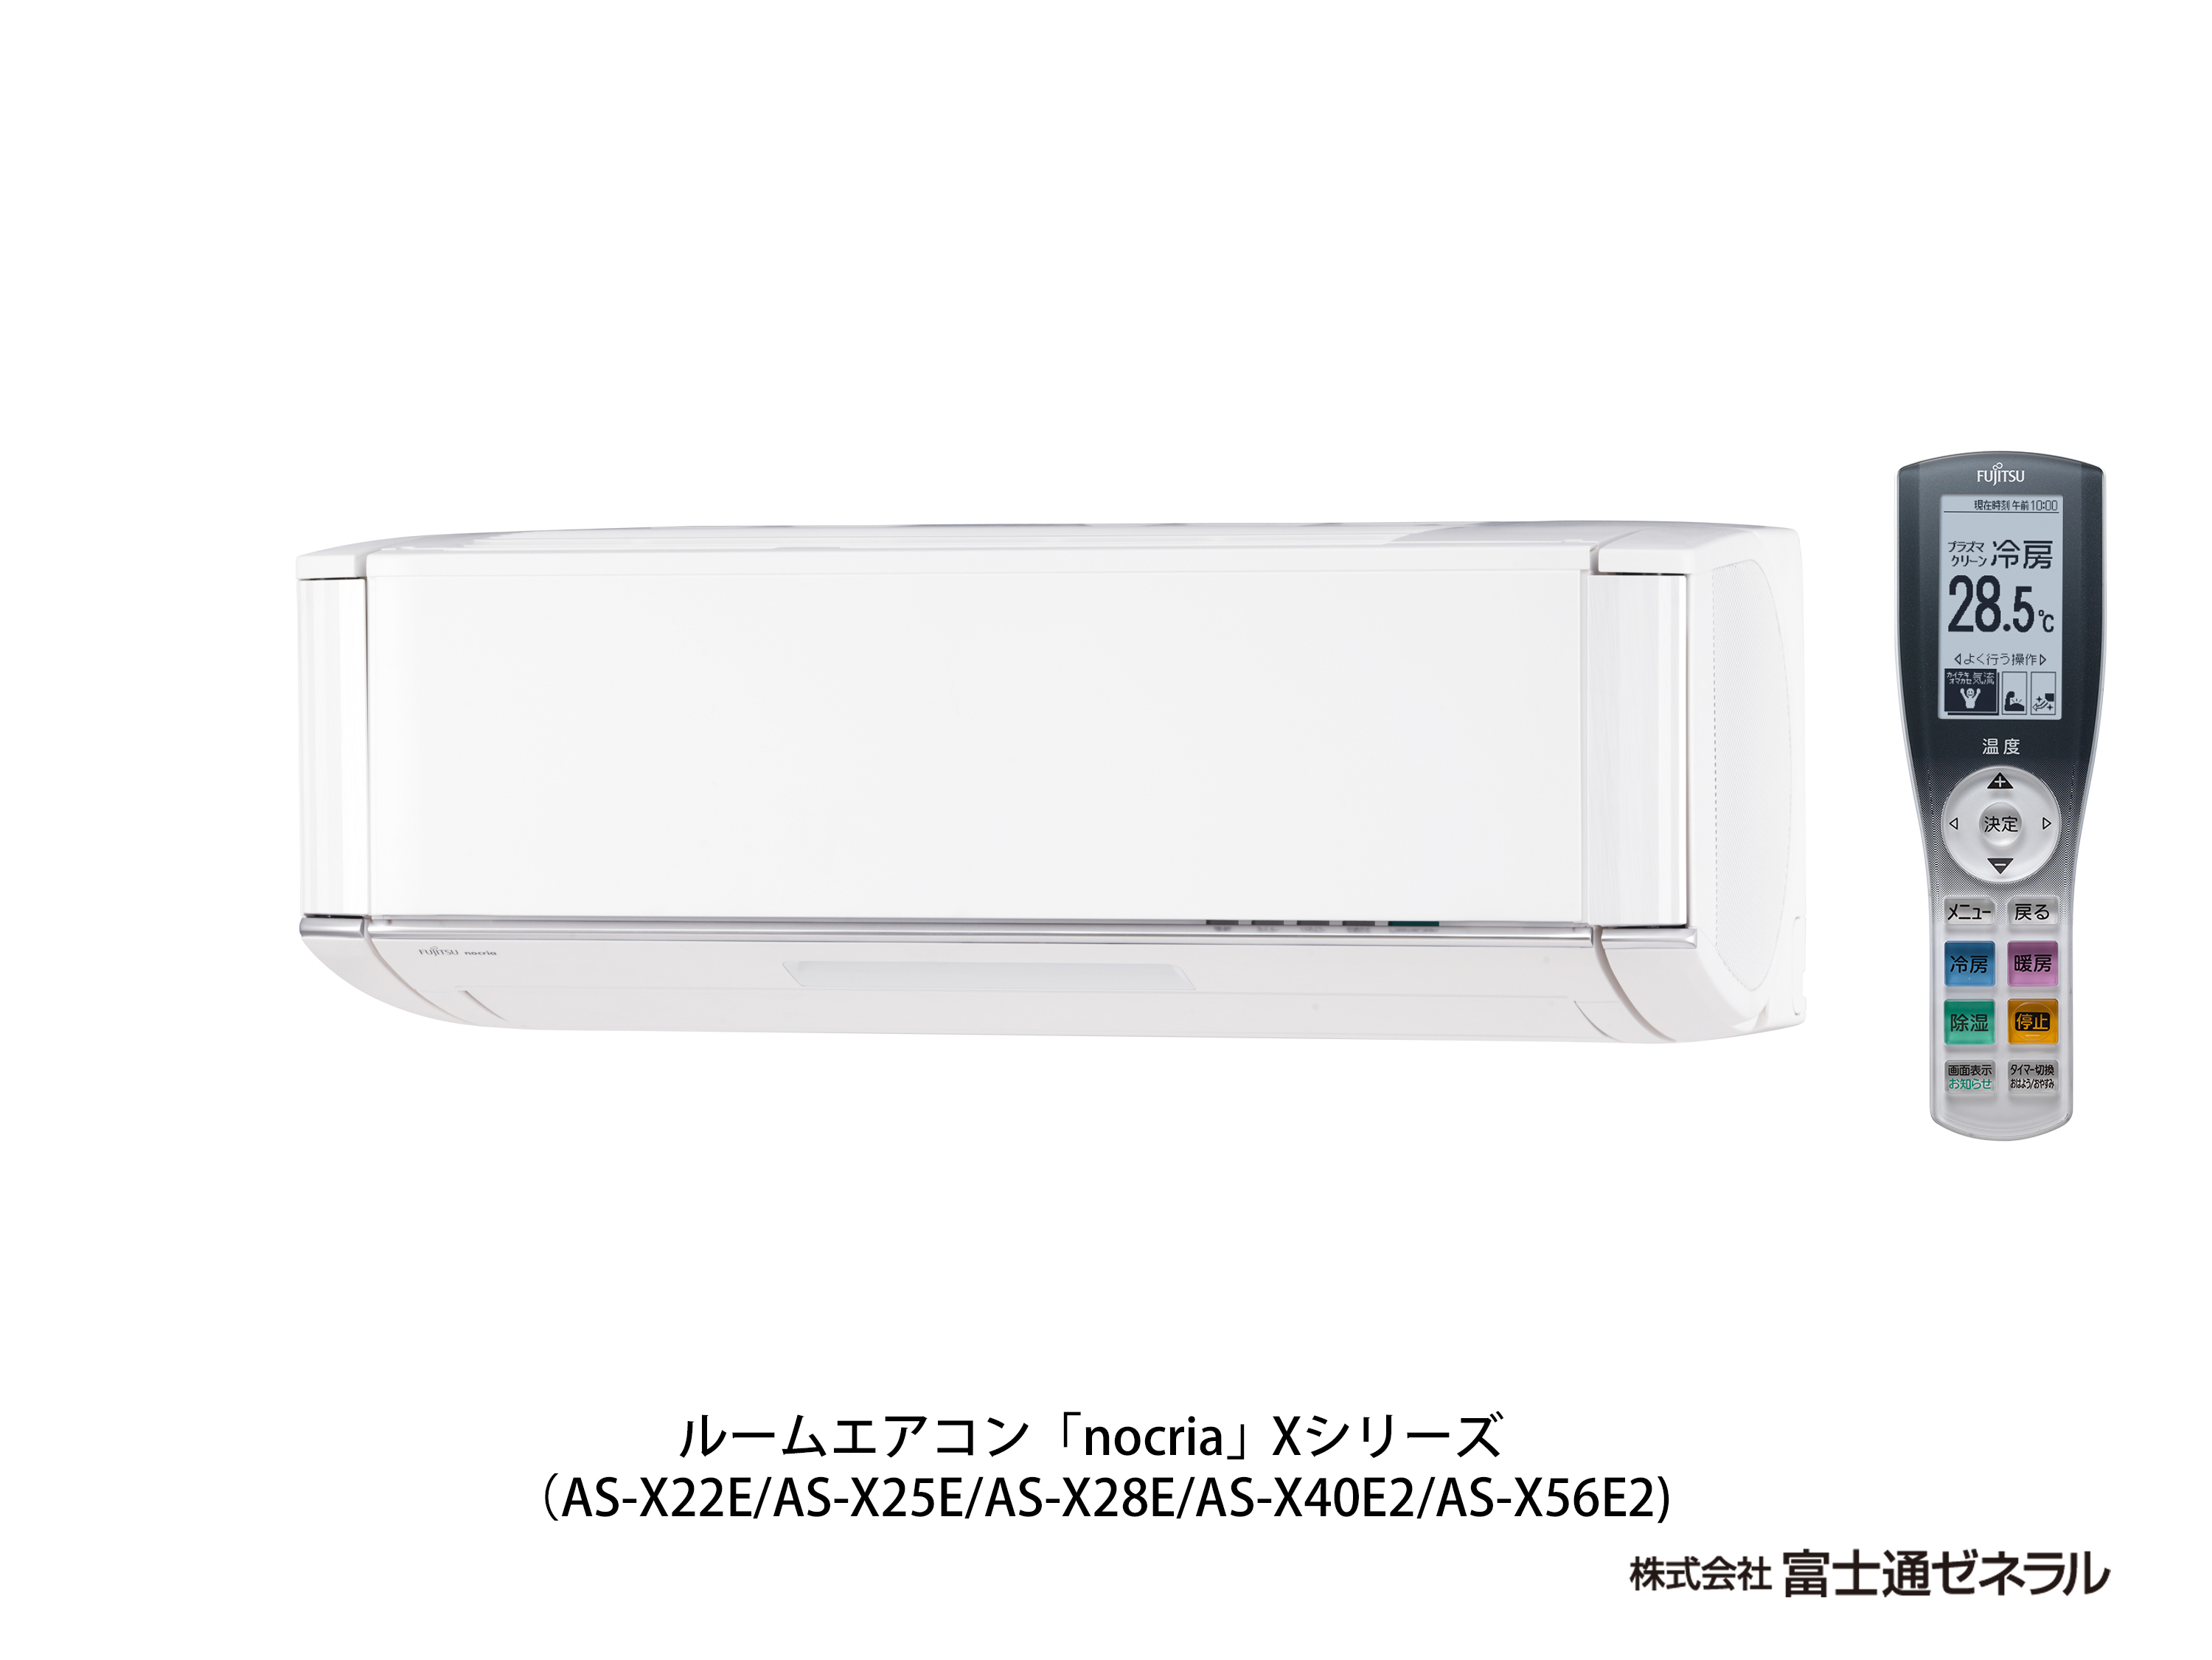 AS-X40E2 概要 2015年 エアコン nocria®X シリーズ - 富士通ゼネラル JP